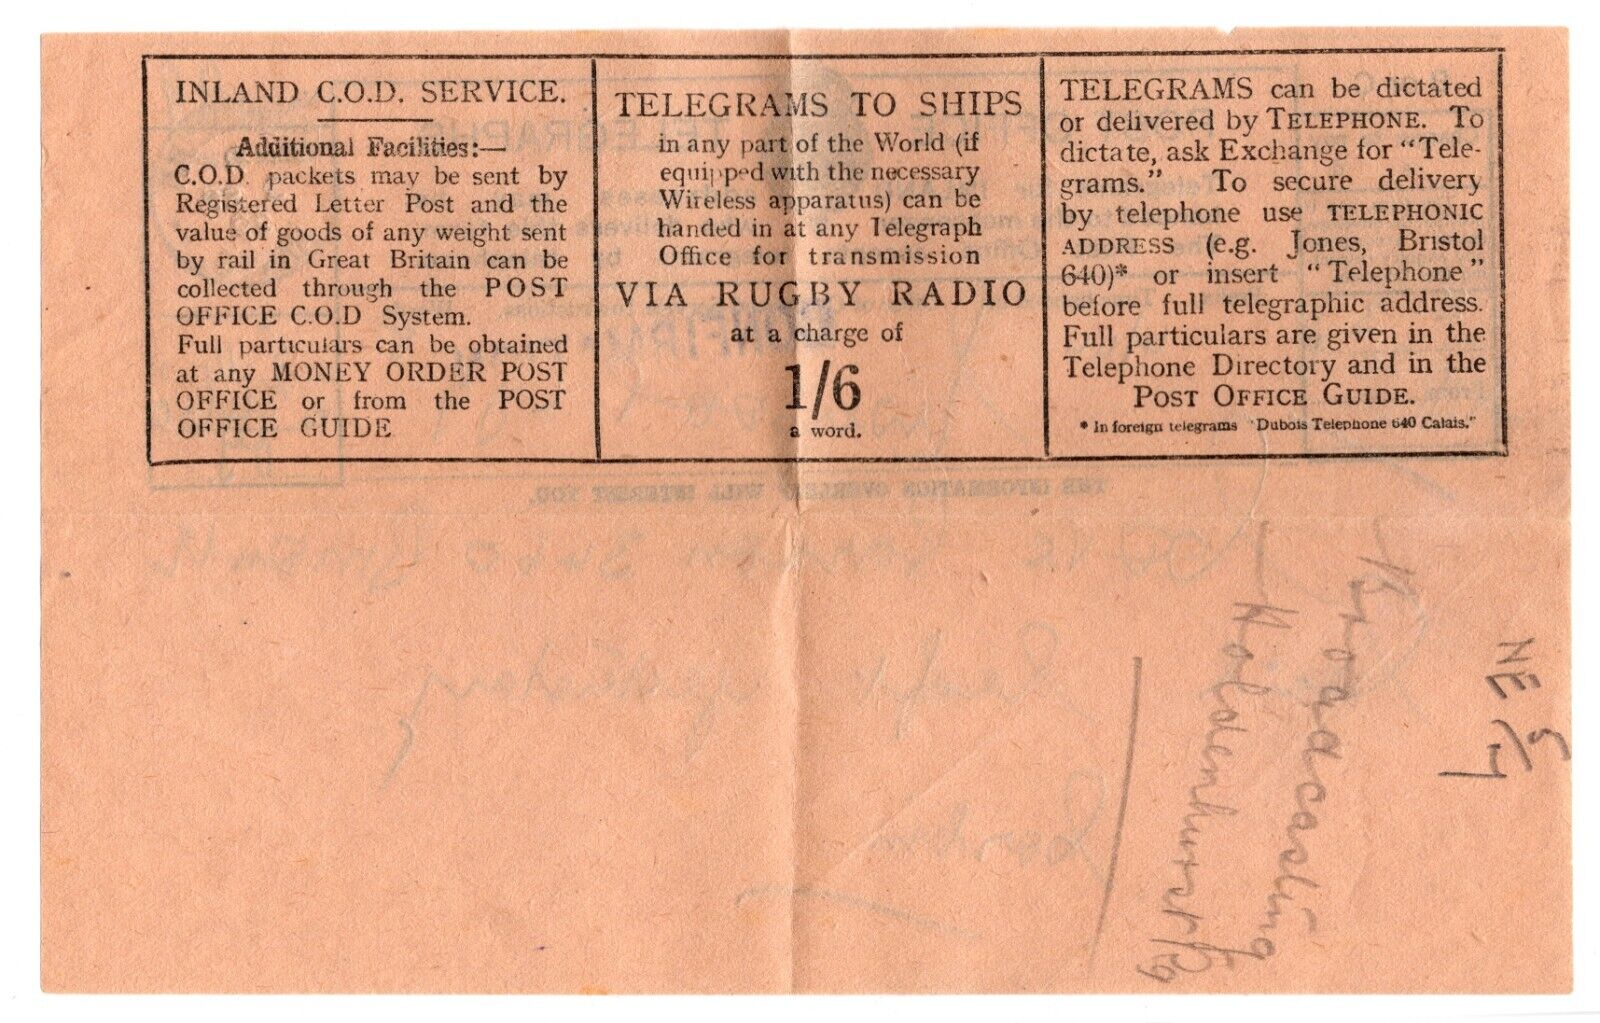 PO Telegraph Form of 3-9-1929 - back